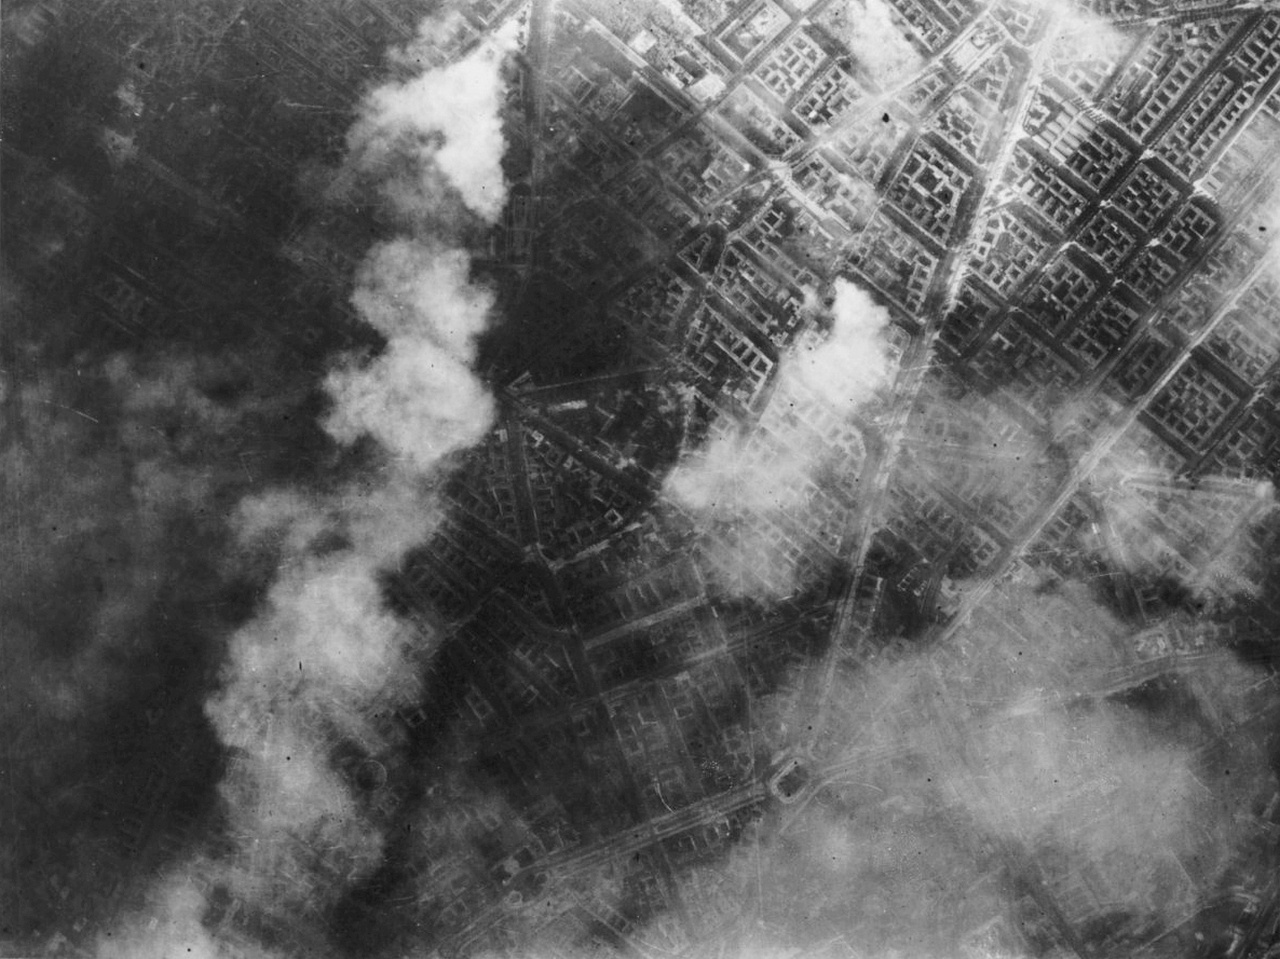 Вид на центр Берлина с борта одного из бомбардировщиков во время авианалёта.